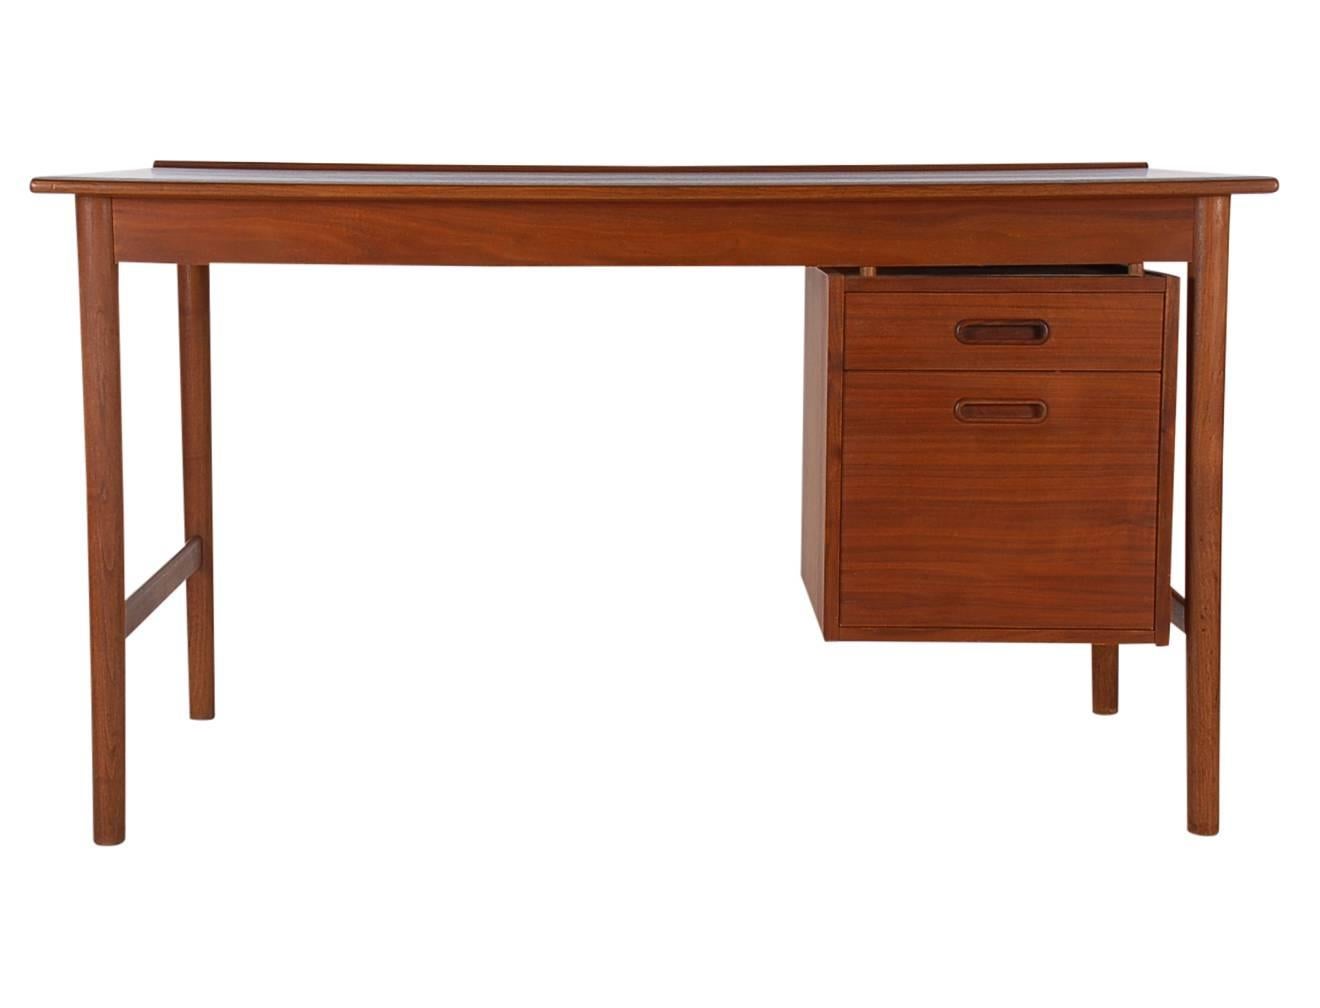 Mid-20th Century Midcentury Danish Modern Desks in Walnut and Teak by Folke Ohlsson for DUX